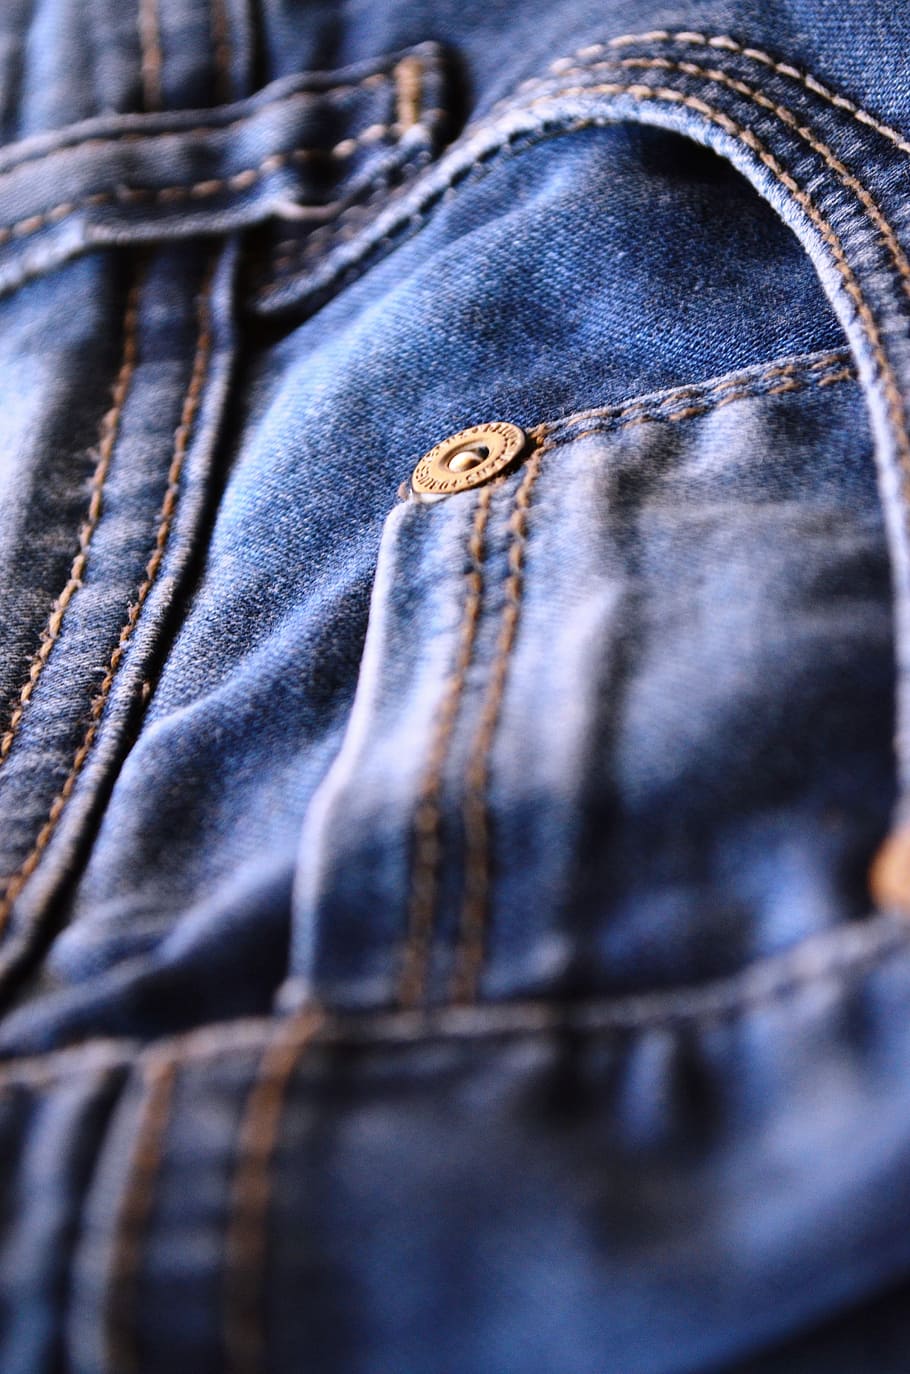 Jeans, Pocket, Fashion, Clothing, blue, casual, denim, cotton, cloth, trousers